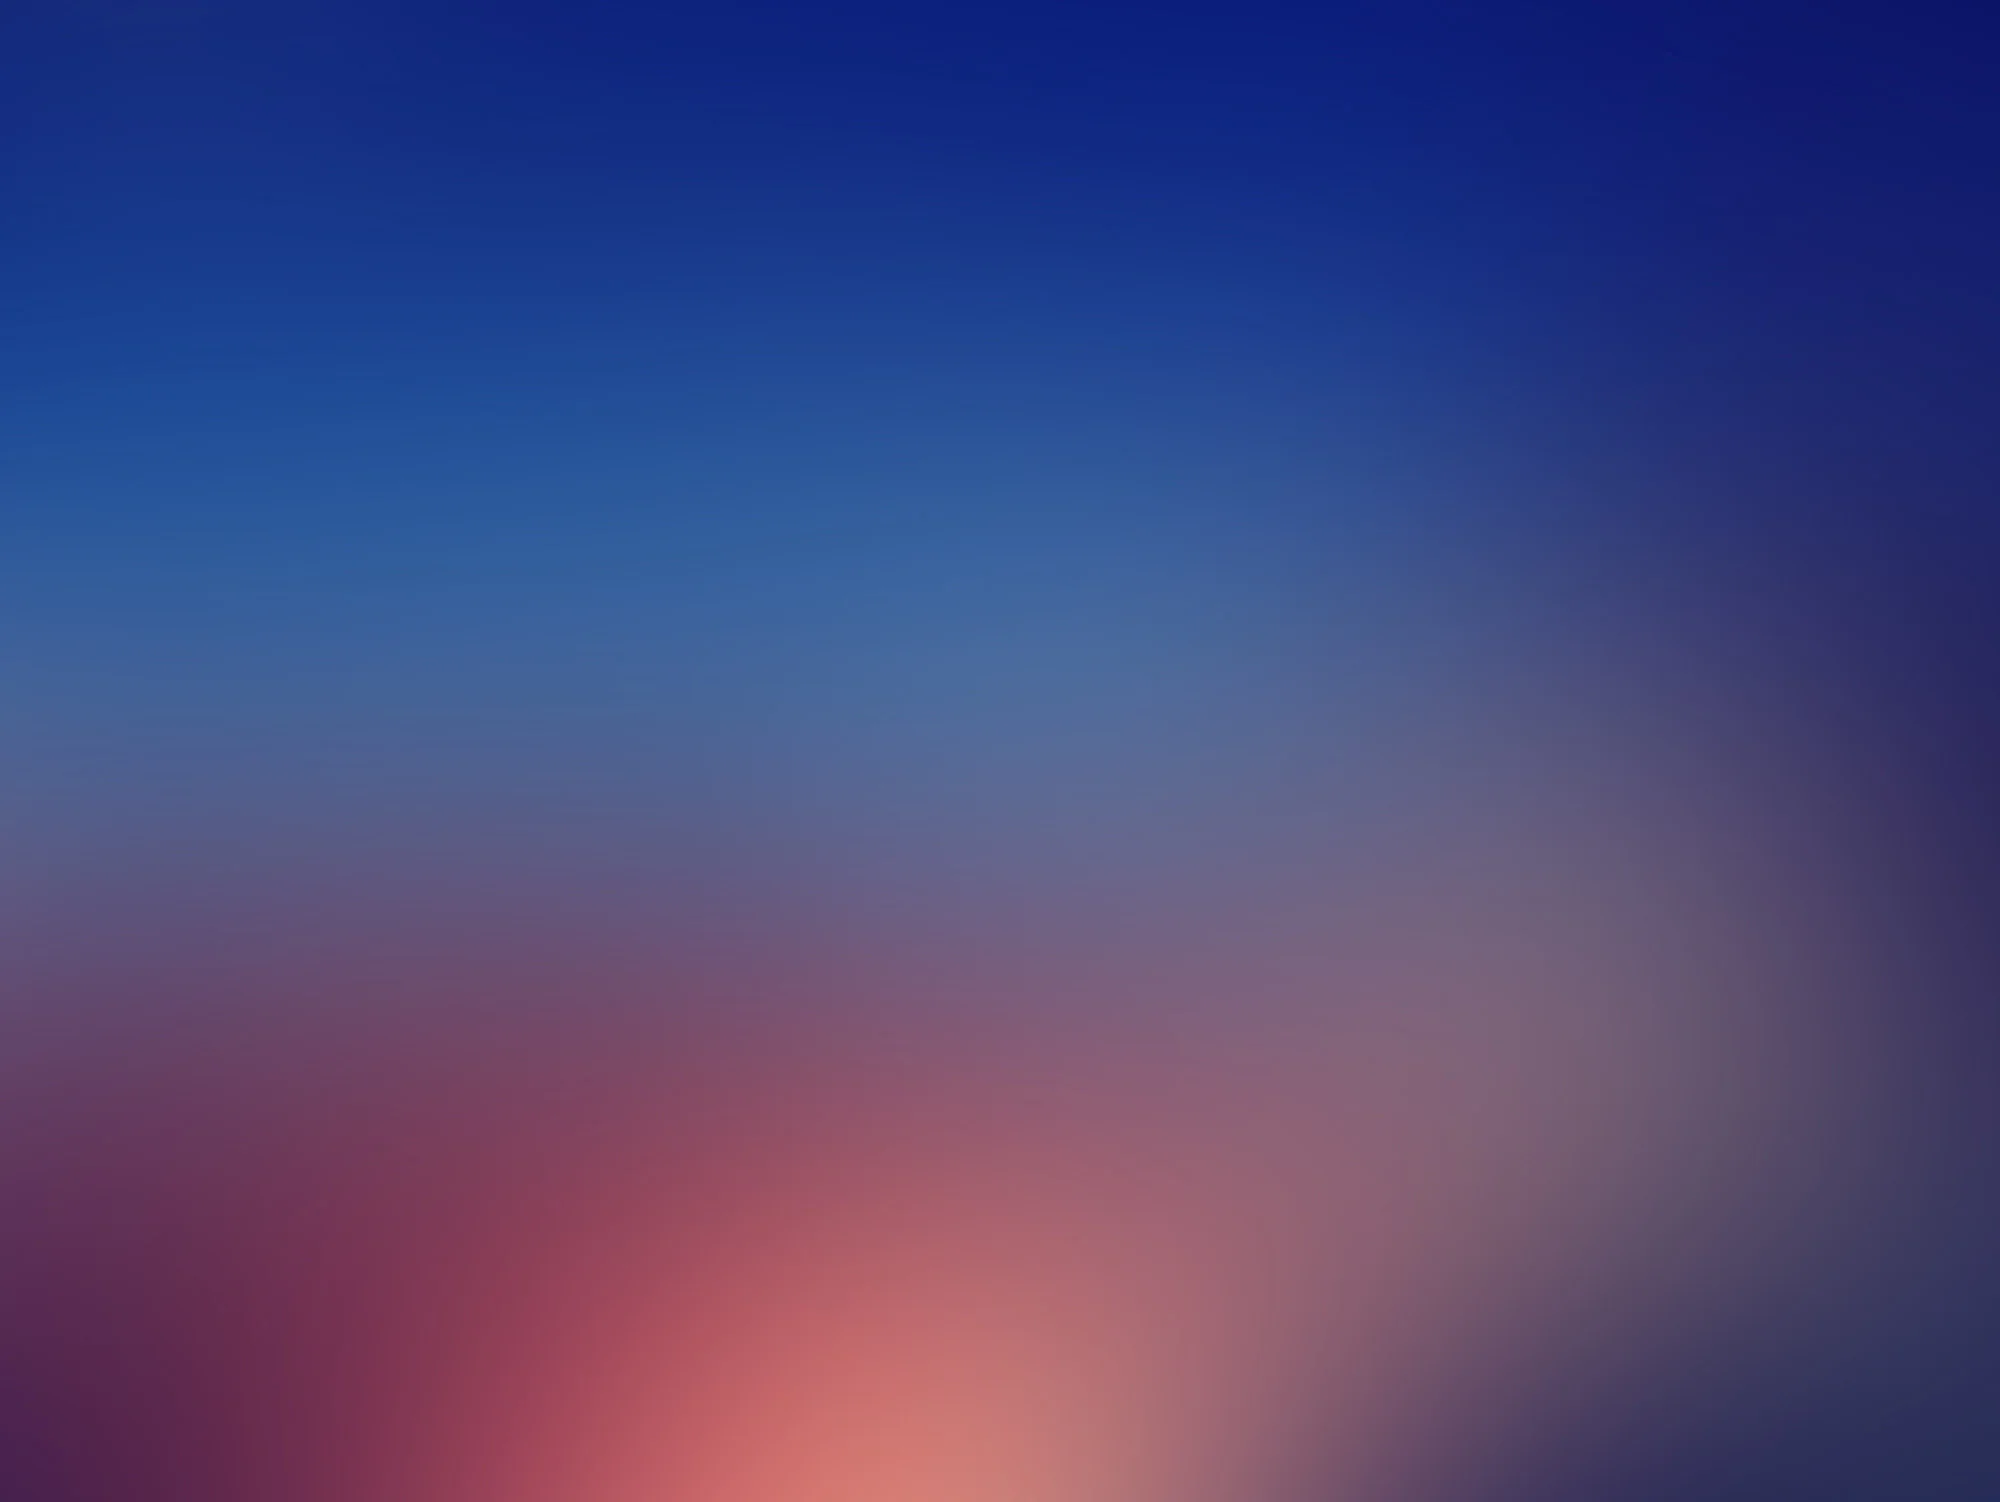 1125x2436 Dark Pastel Blue Solid Color Background